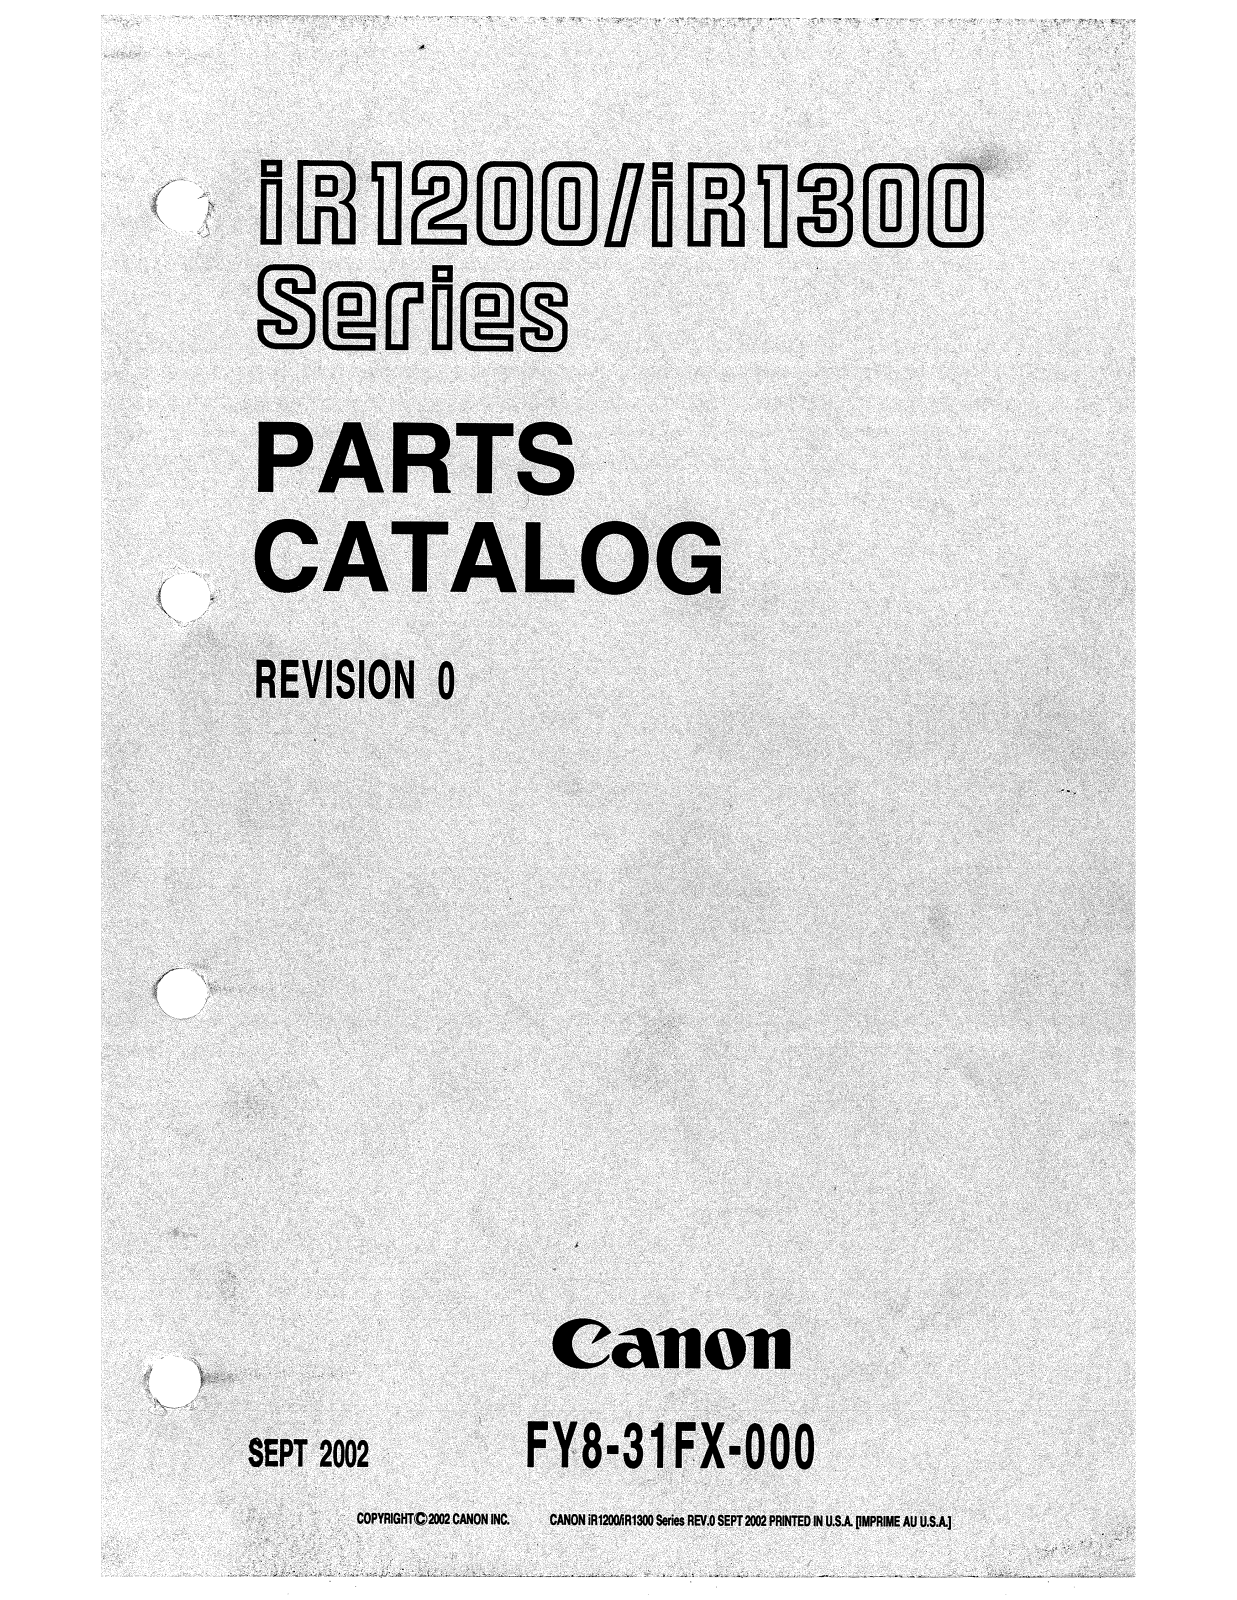 Canon IR1200, IR1300 PARTS CATALOG